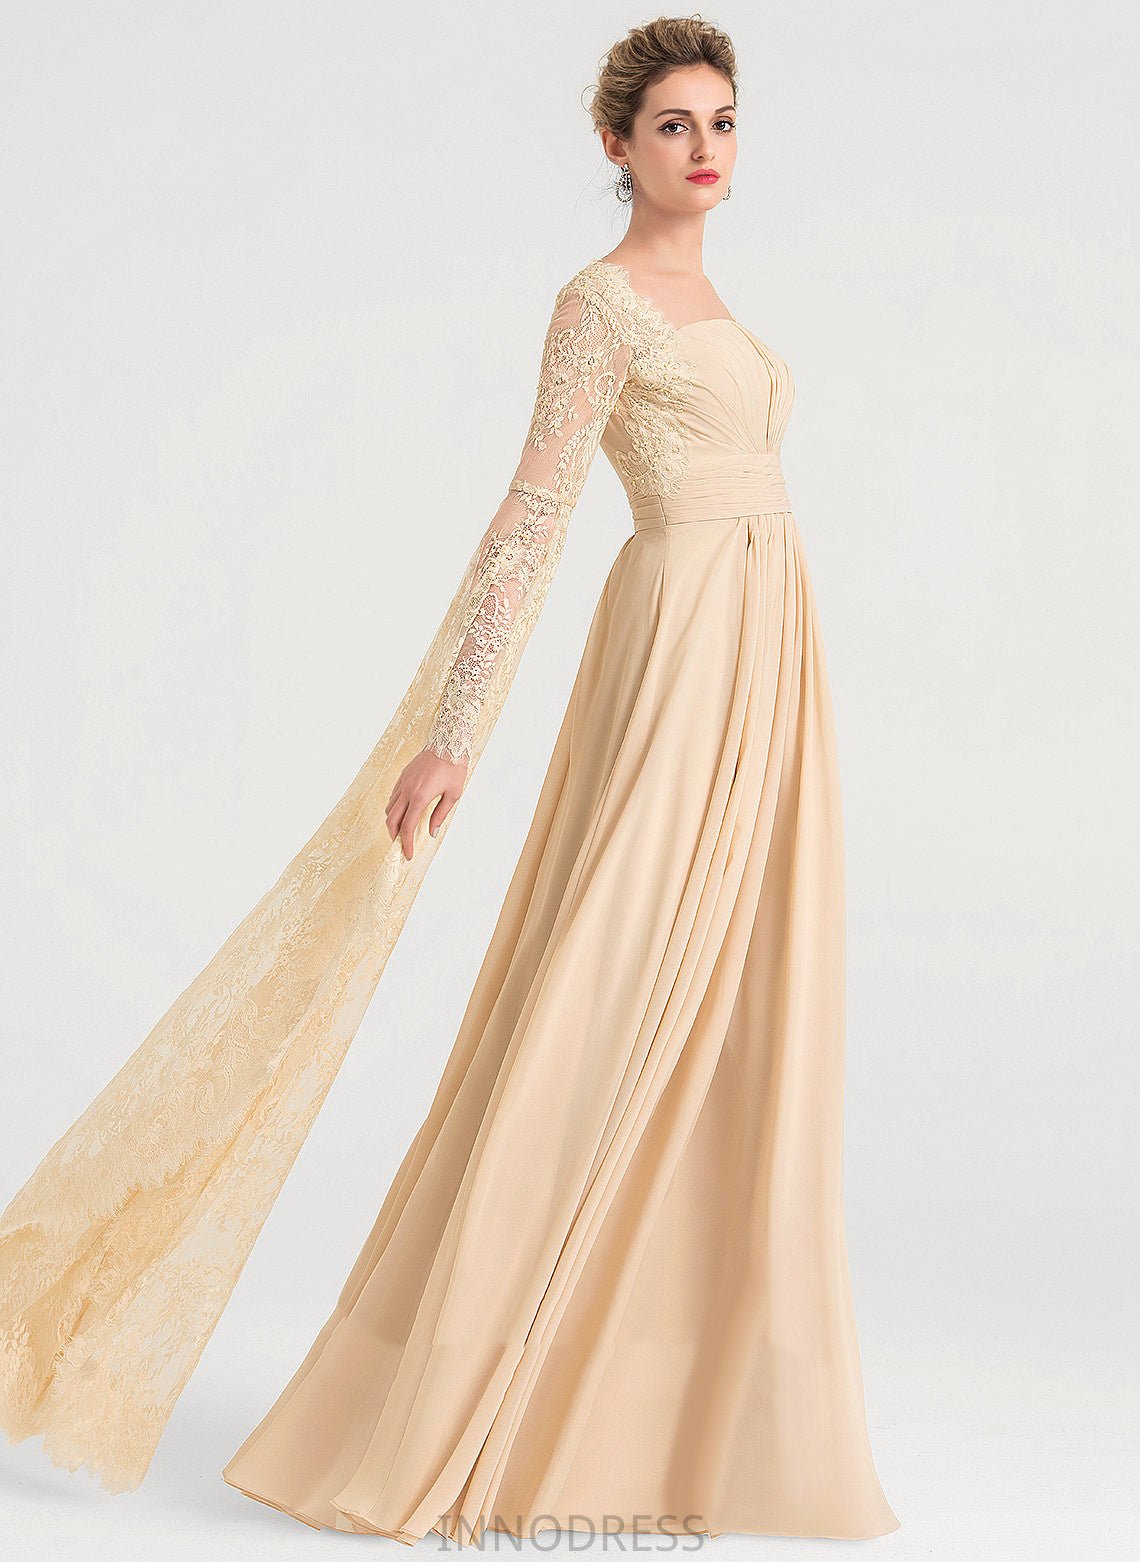 Ruffle Dress Square Neckline Beading Wedding Dresses Chiffon Floor-Length With Lace Wedding Hadley A-Line